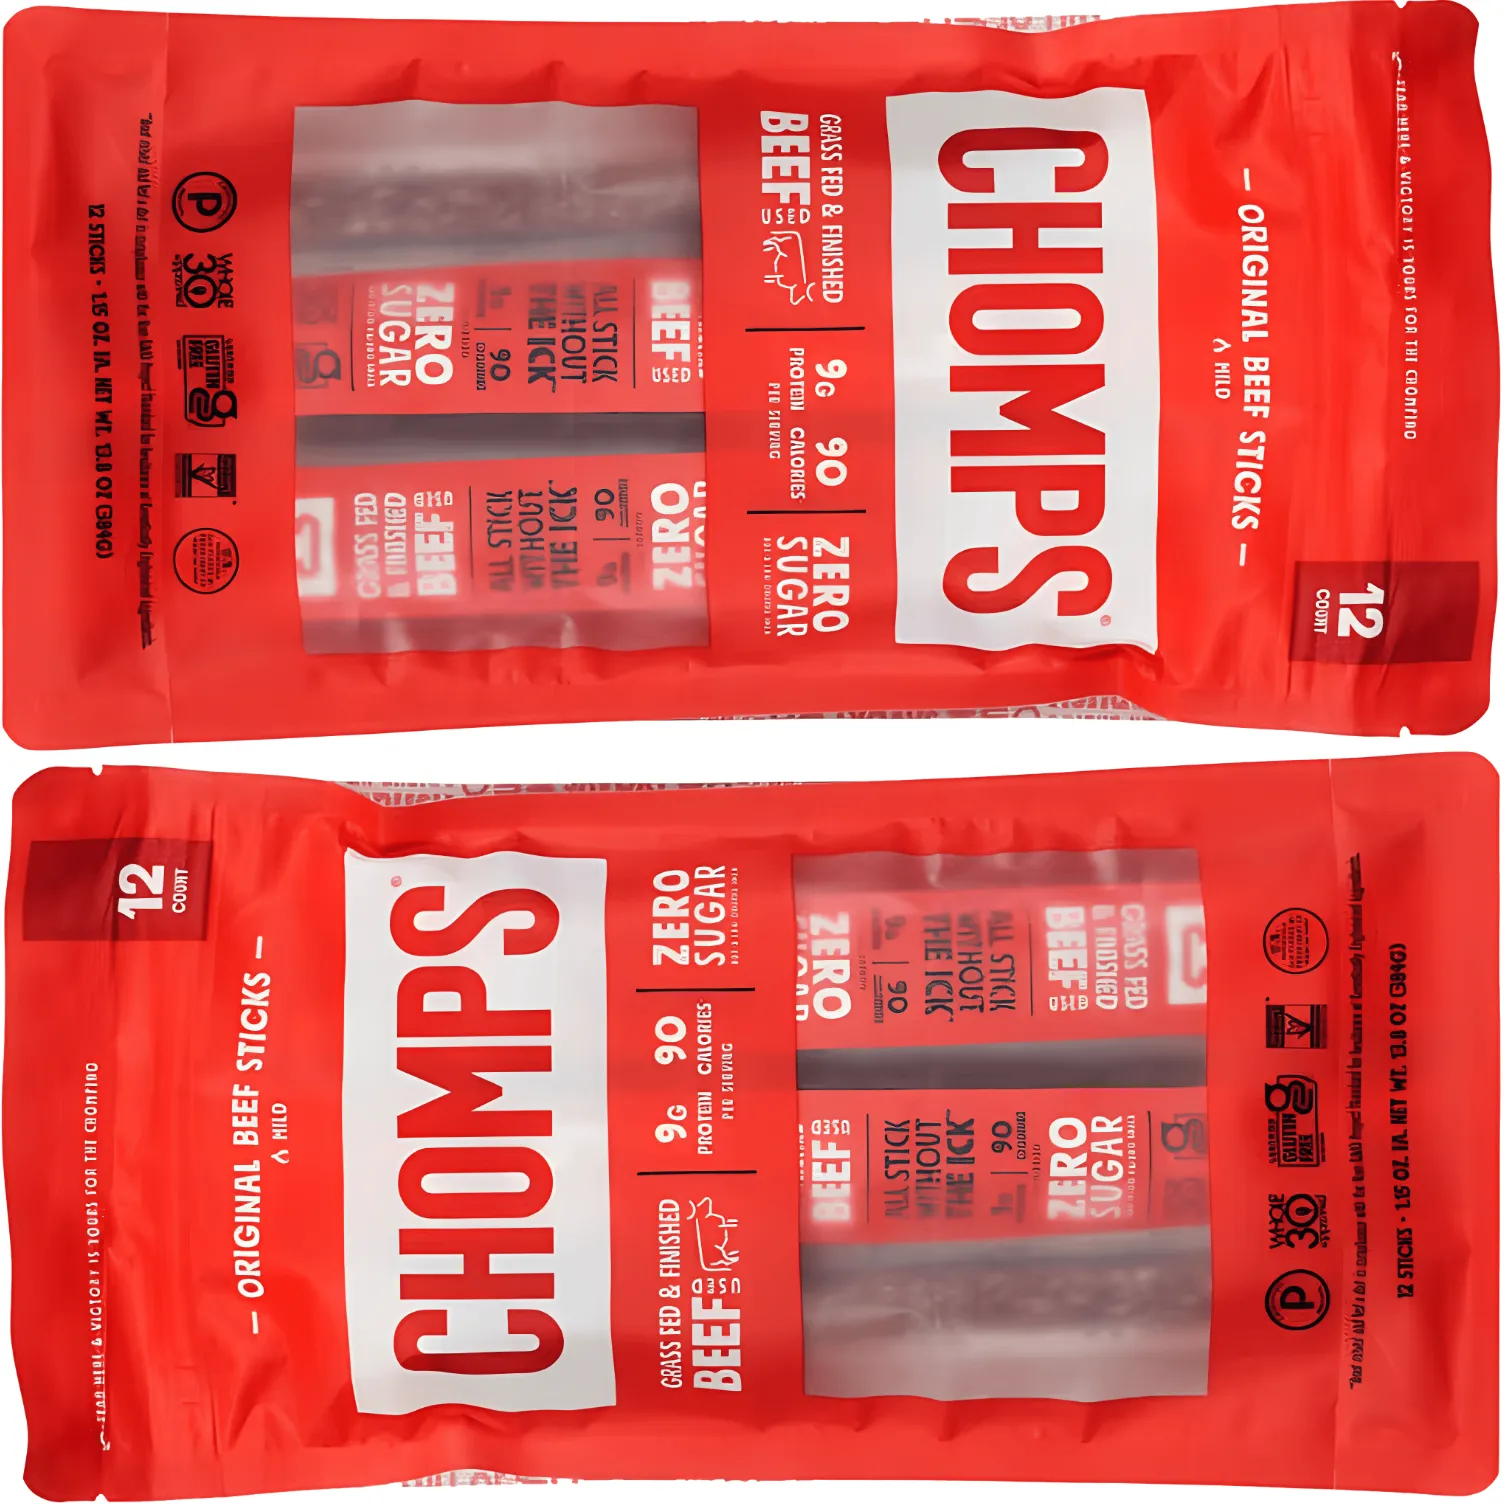 Free Chomps Meat Snacks